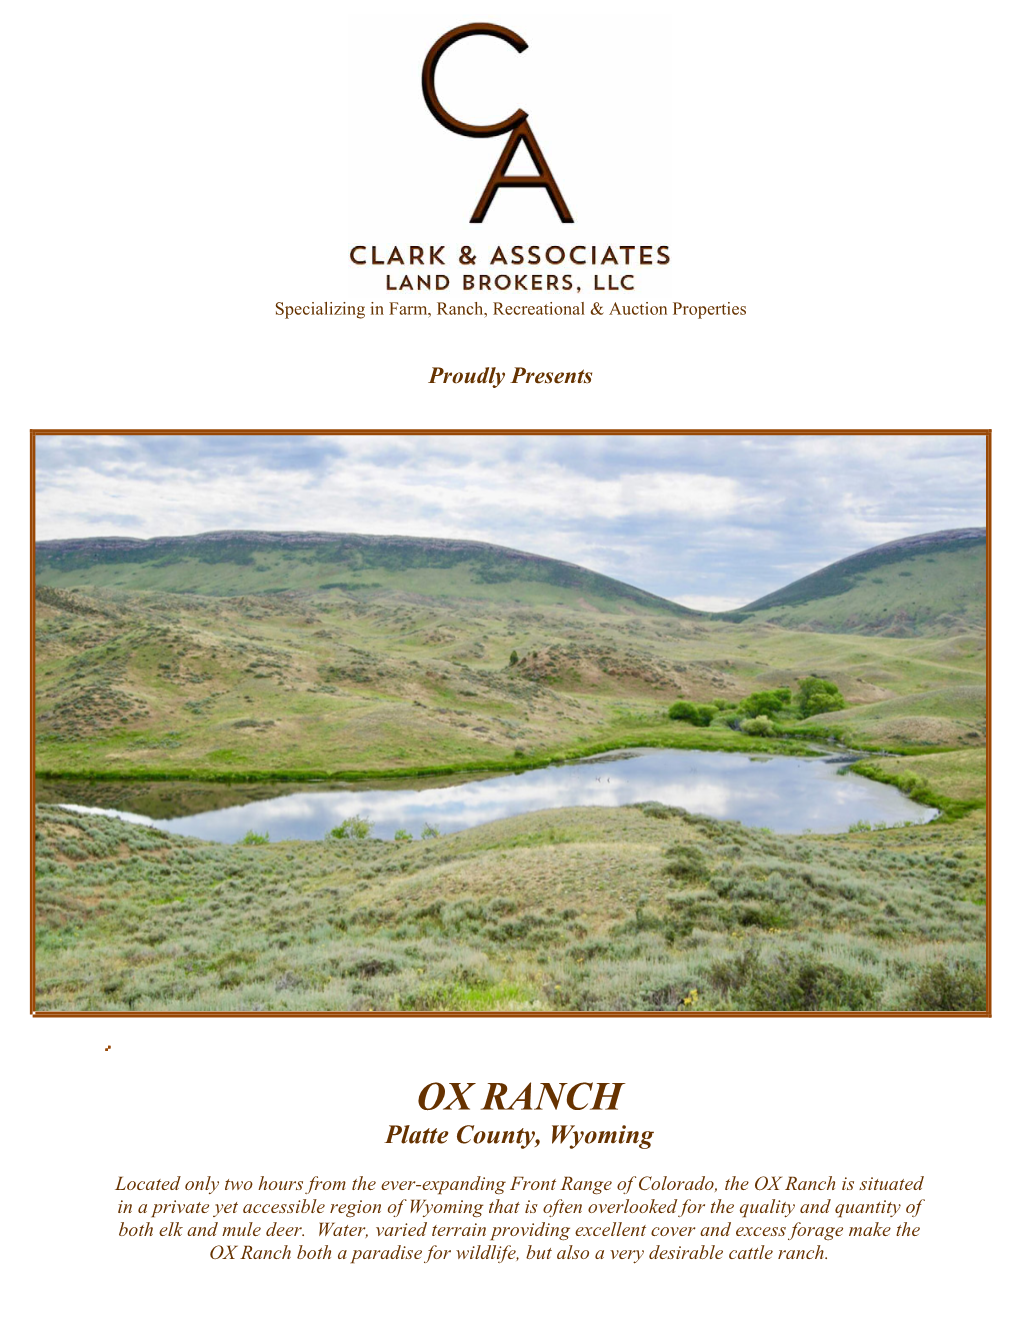 Clark & Associates Land Brokers